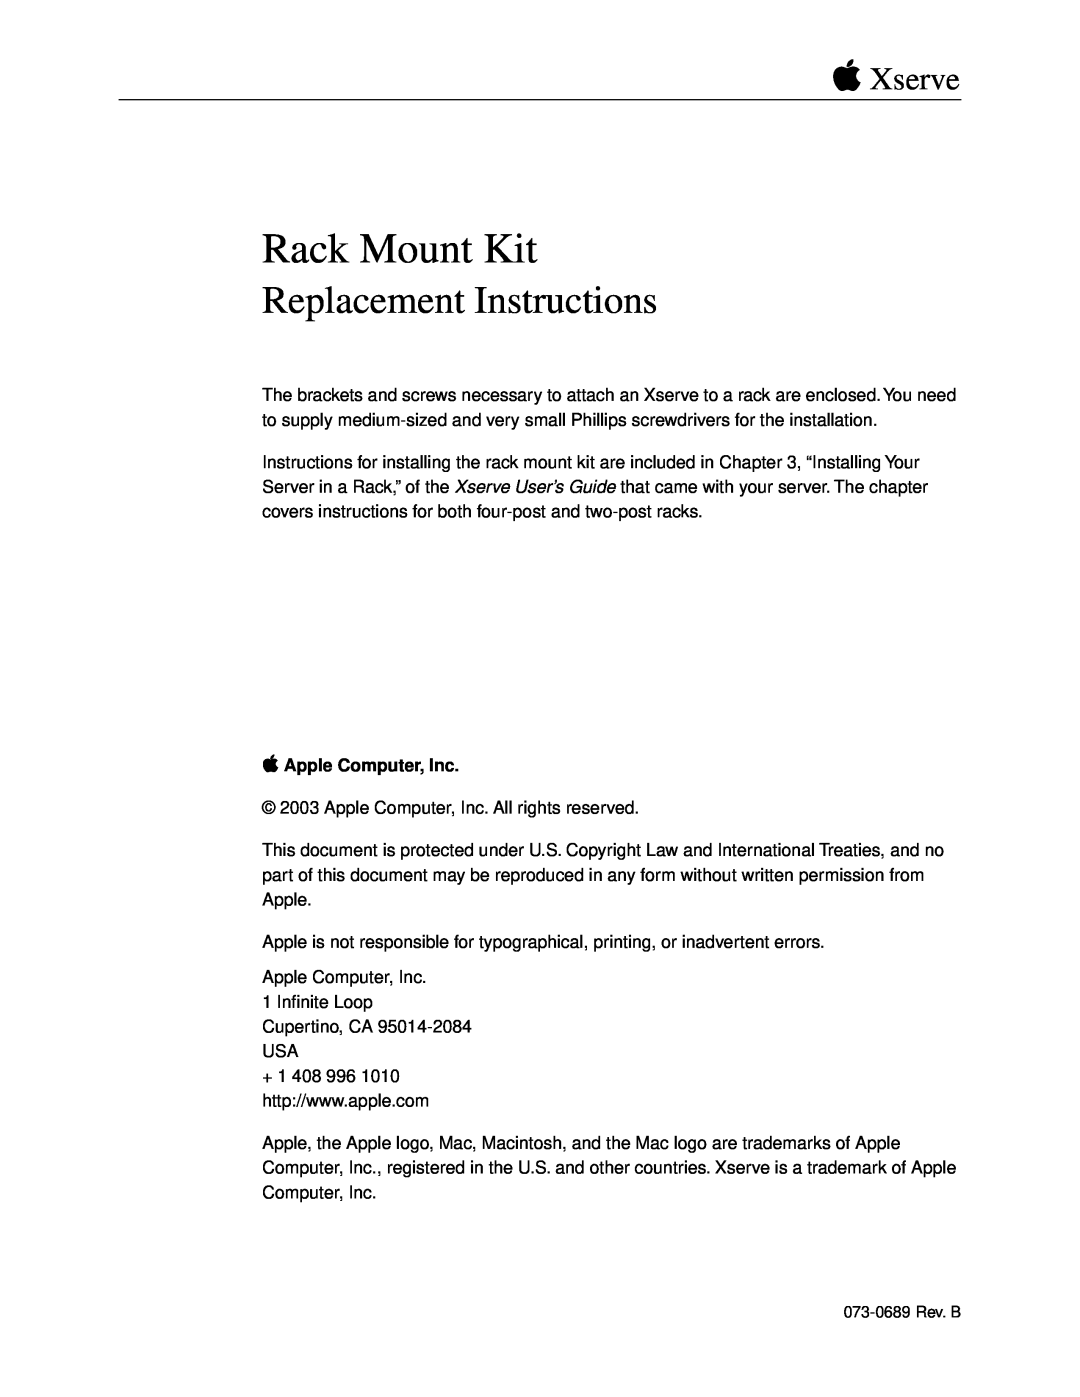 Apple Rack Mount Kit installation instructions Replacement Instructions, ð Xserve, ðApple Computer, Inc 